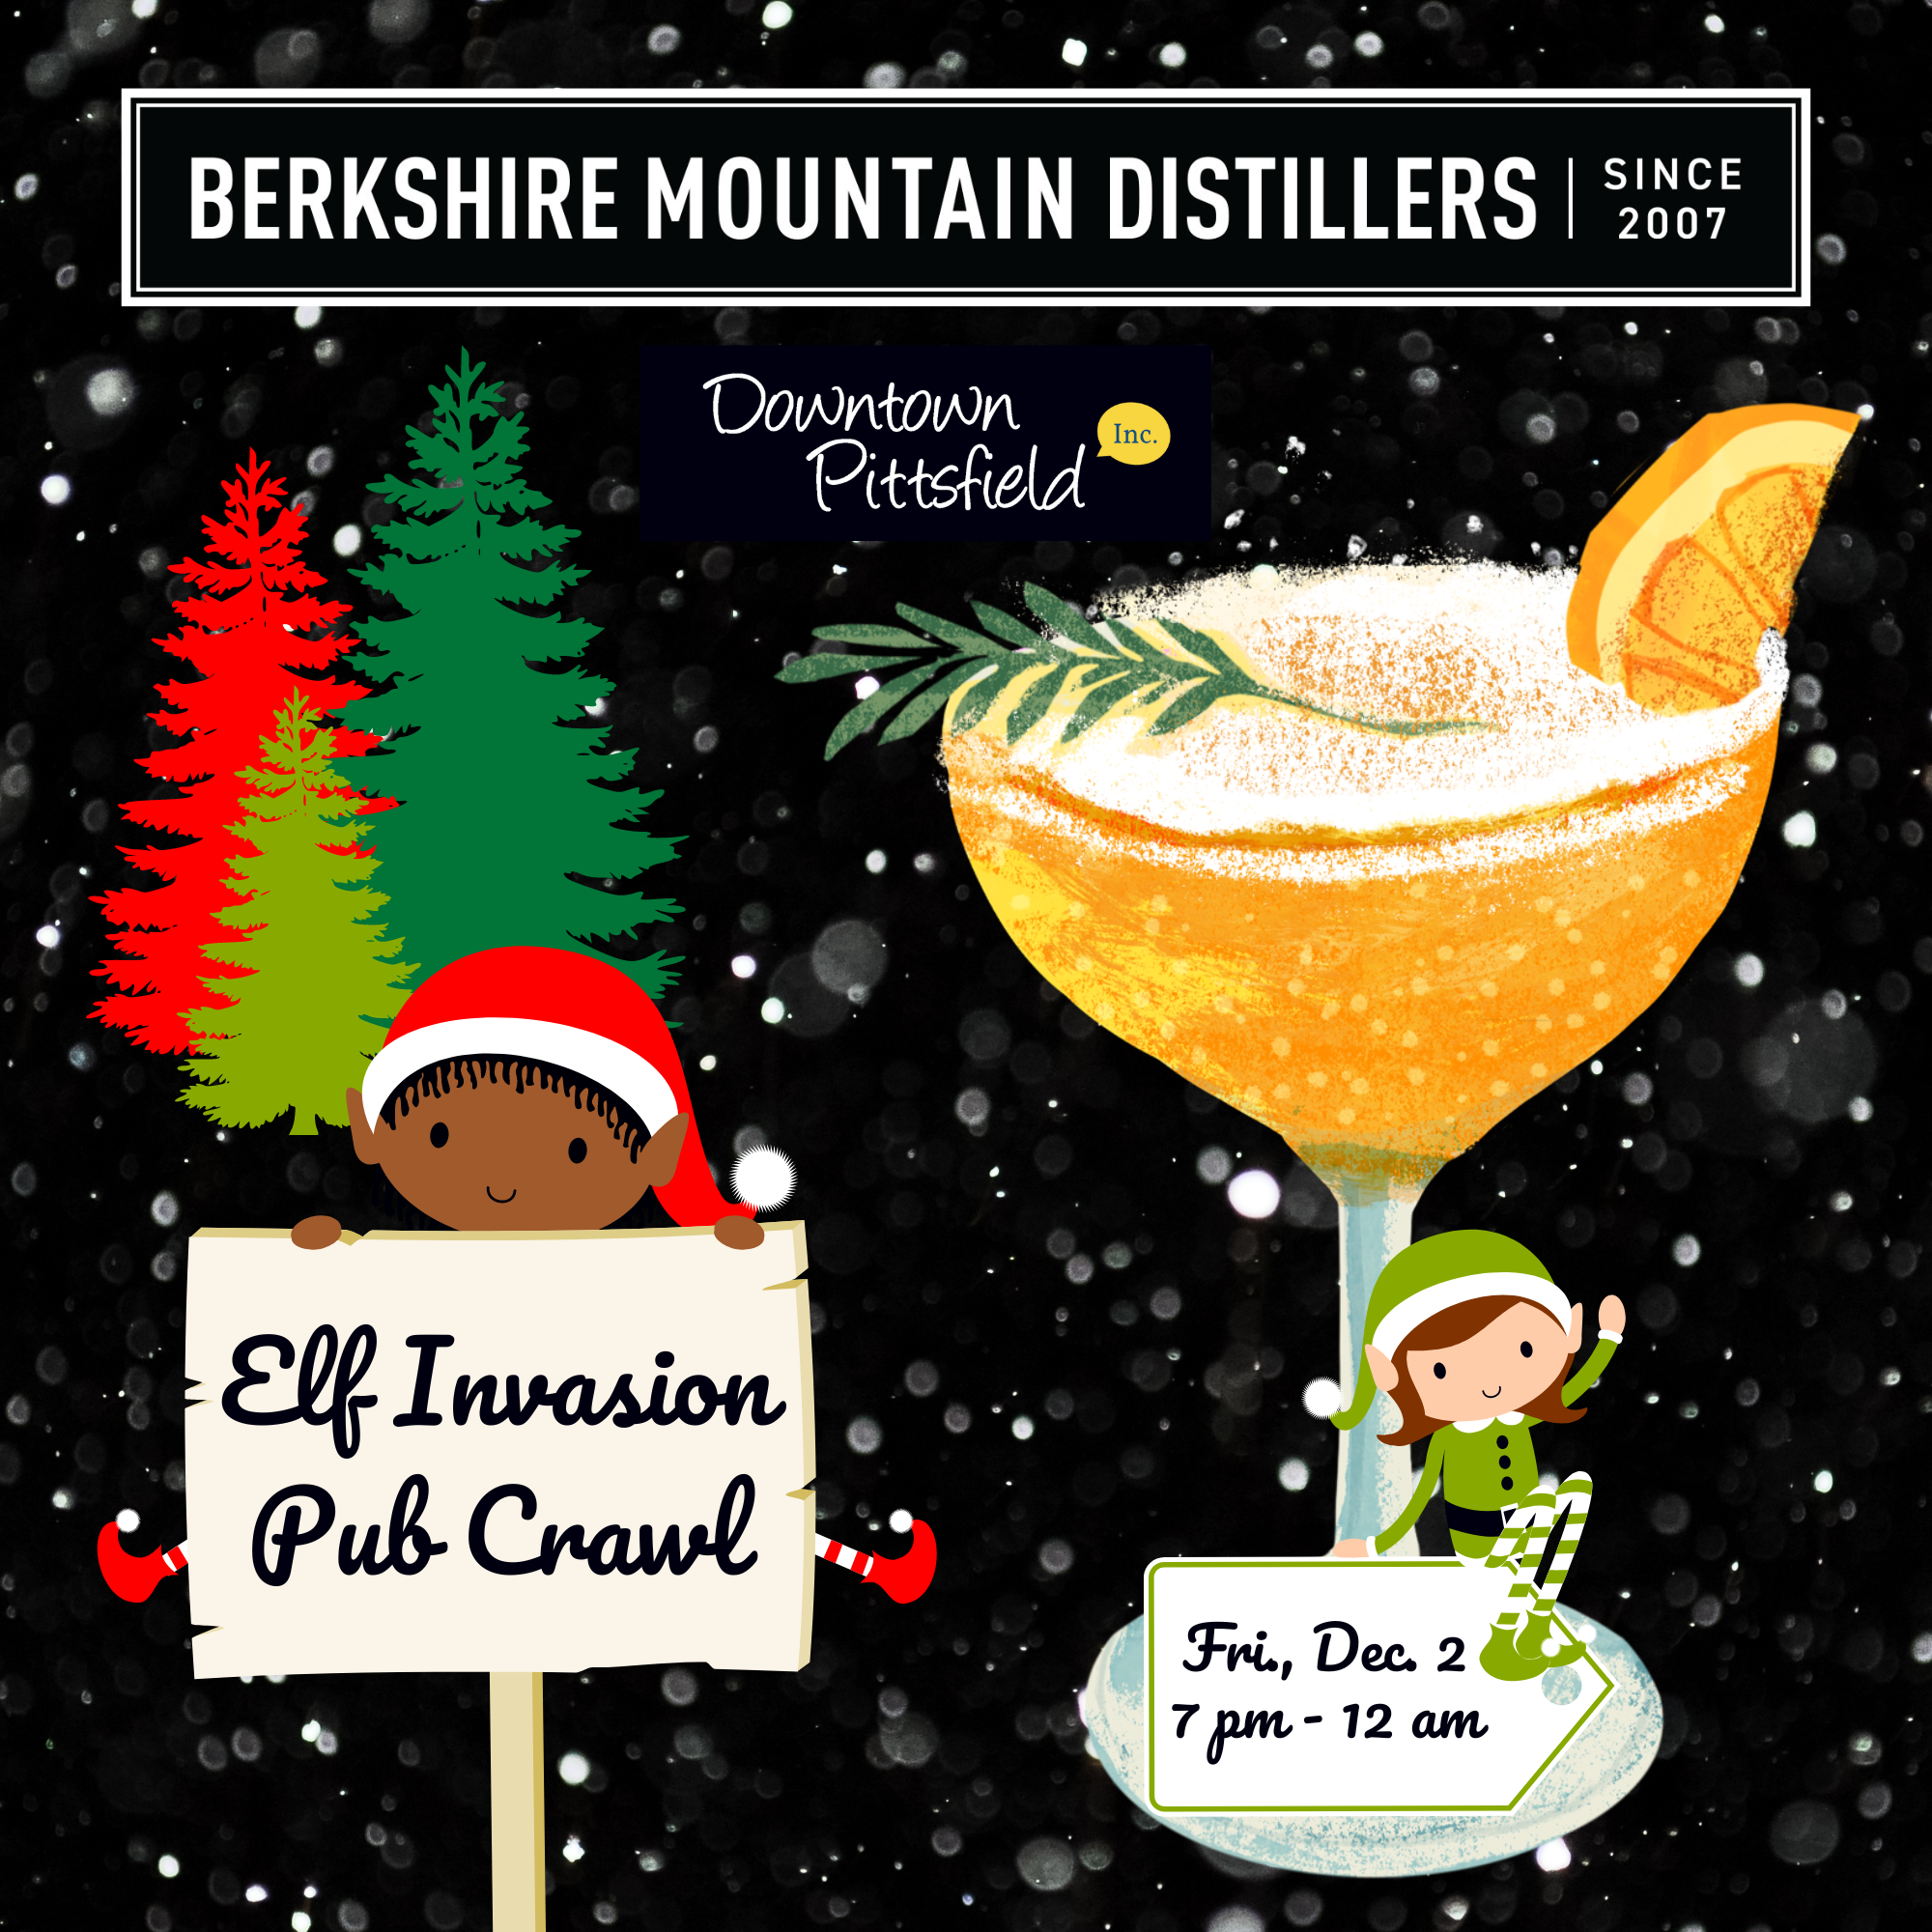 Elf Invasion Pub Crawl with Berkshire Mountain Distillers